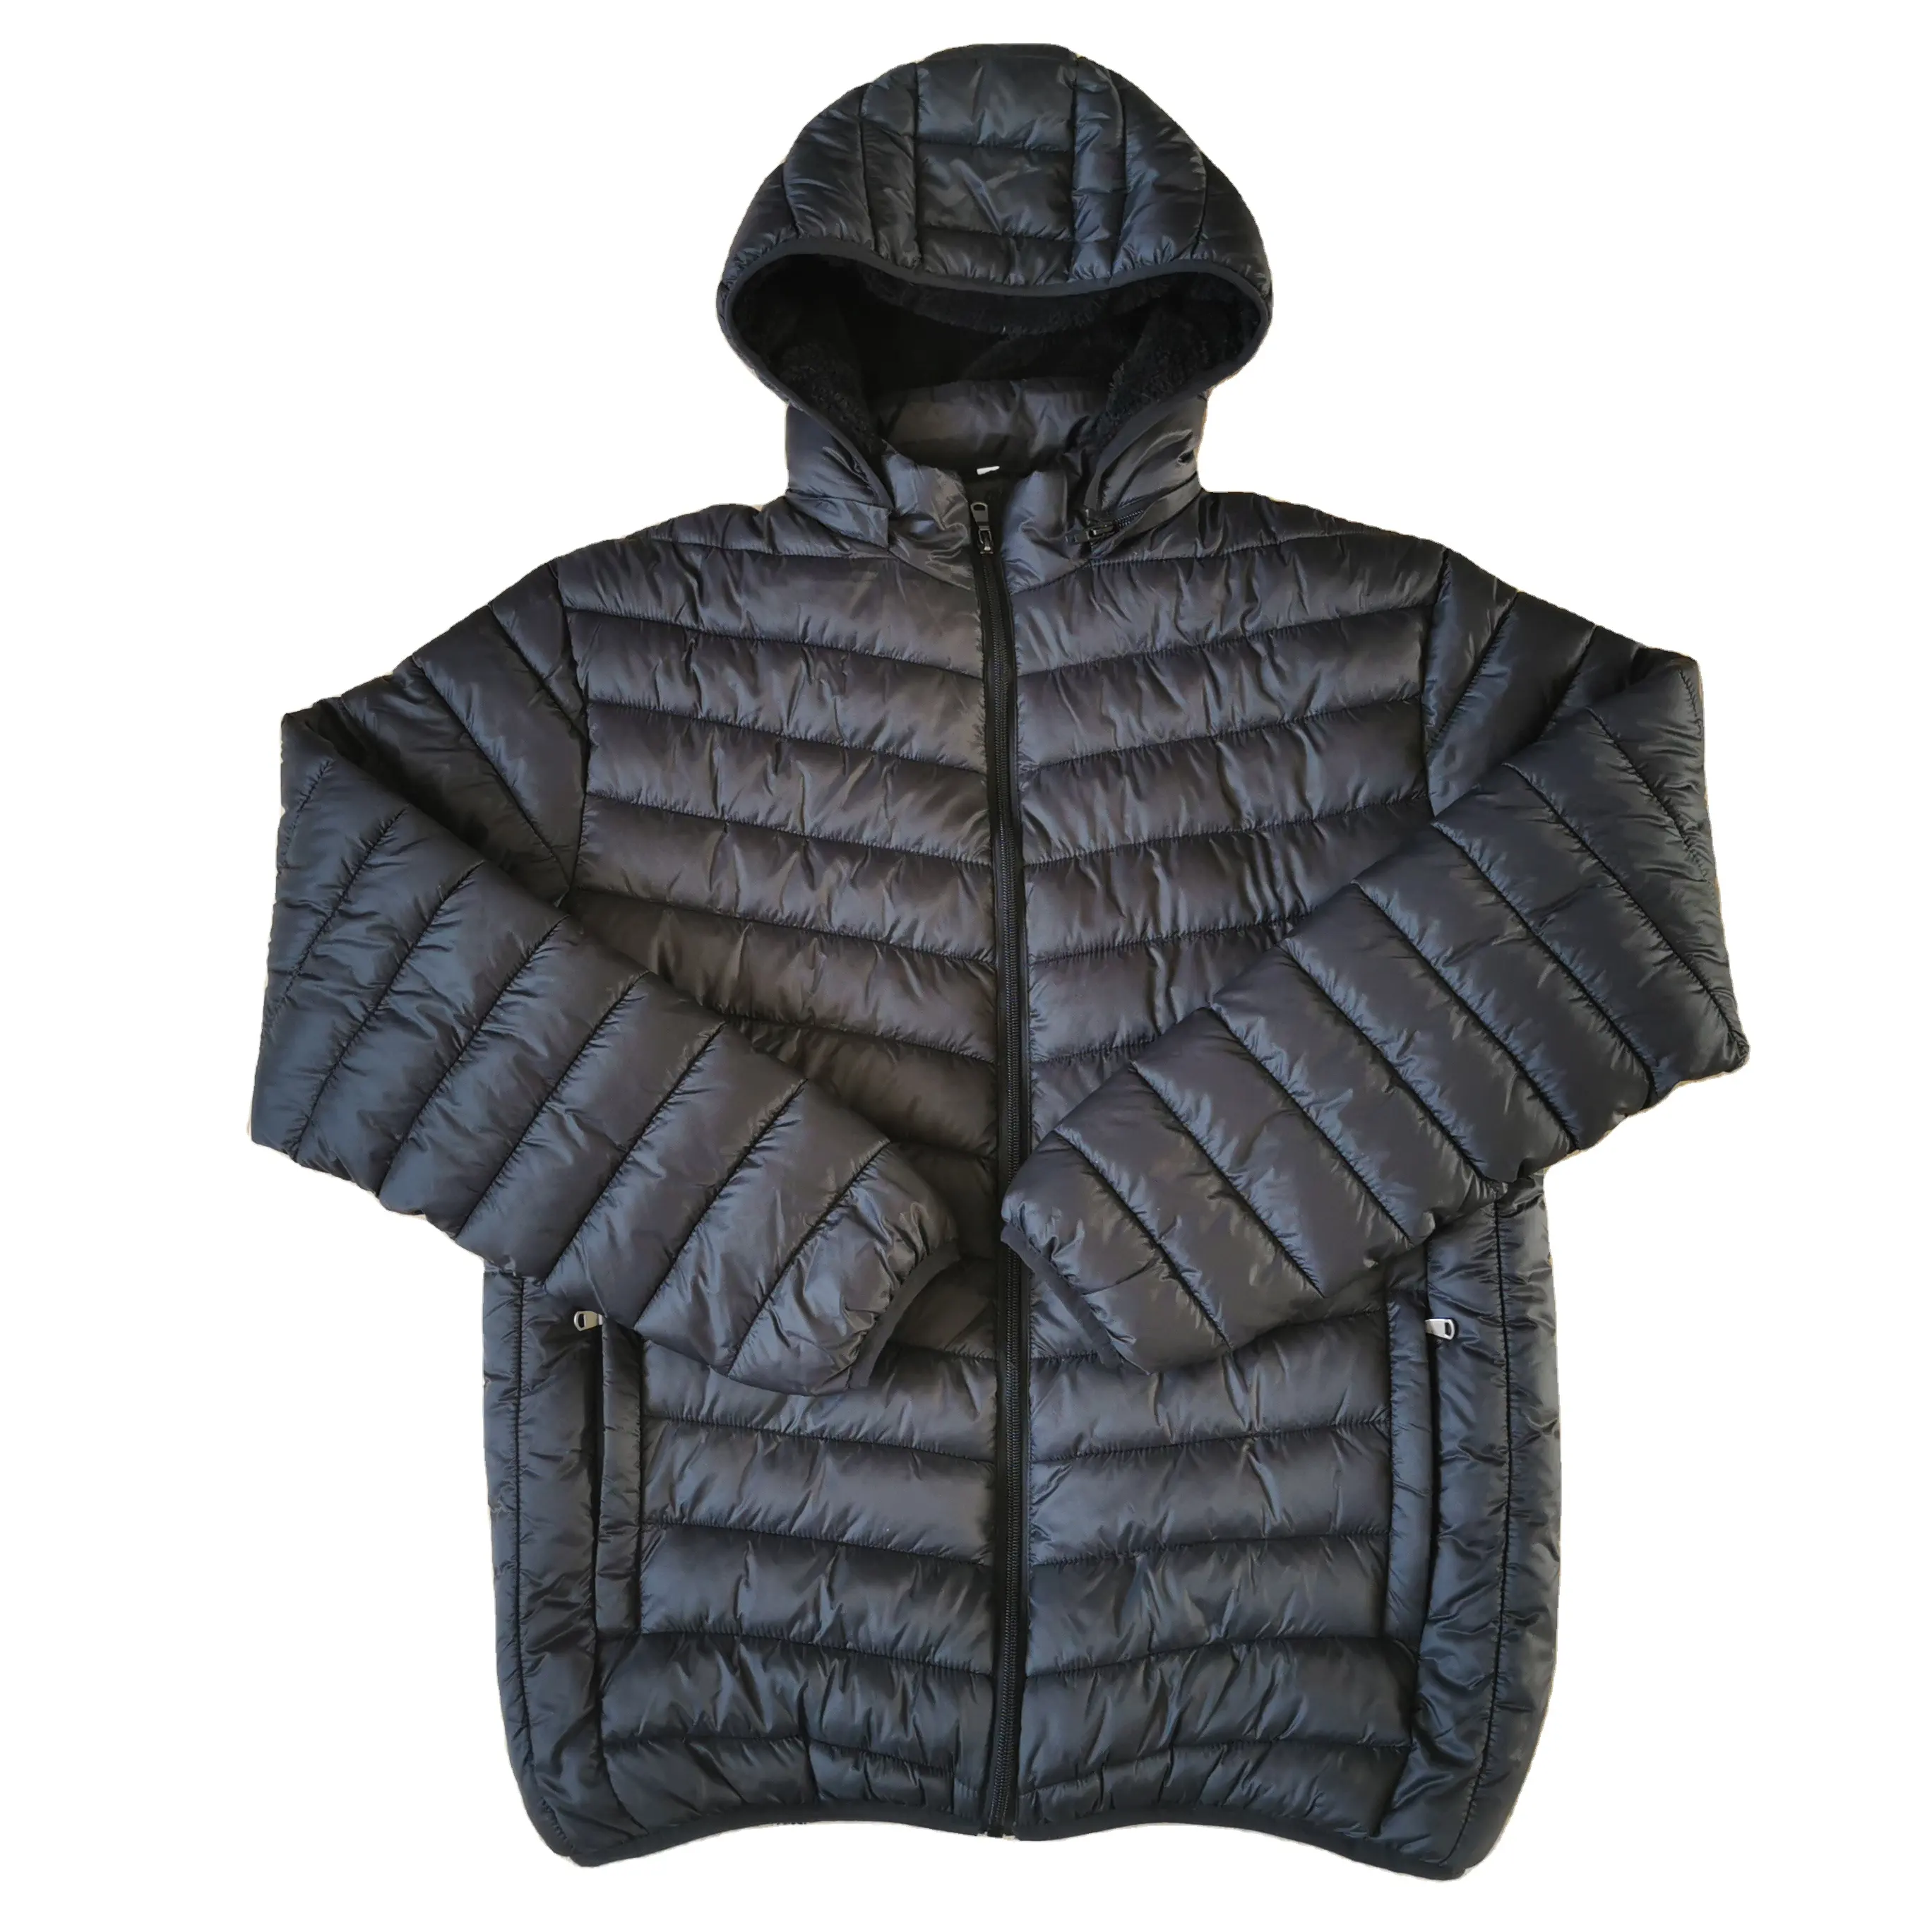 Oemファクトリーカスタム取り外し可能フード付きジャケット男性用フグジャケットウィンターパディングジャケット